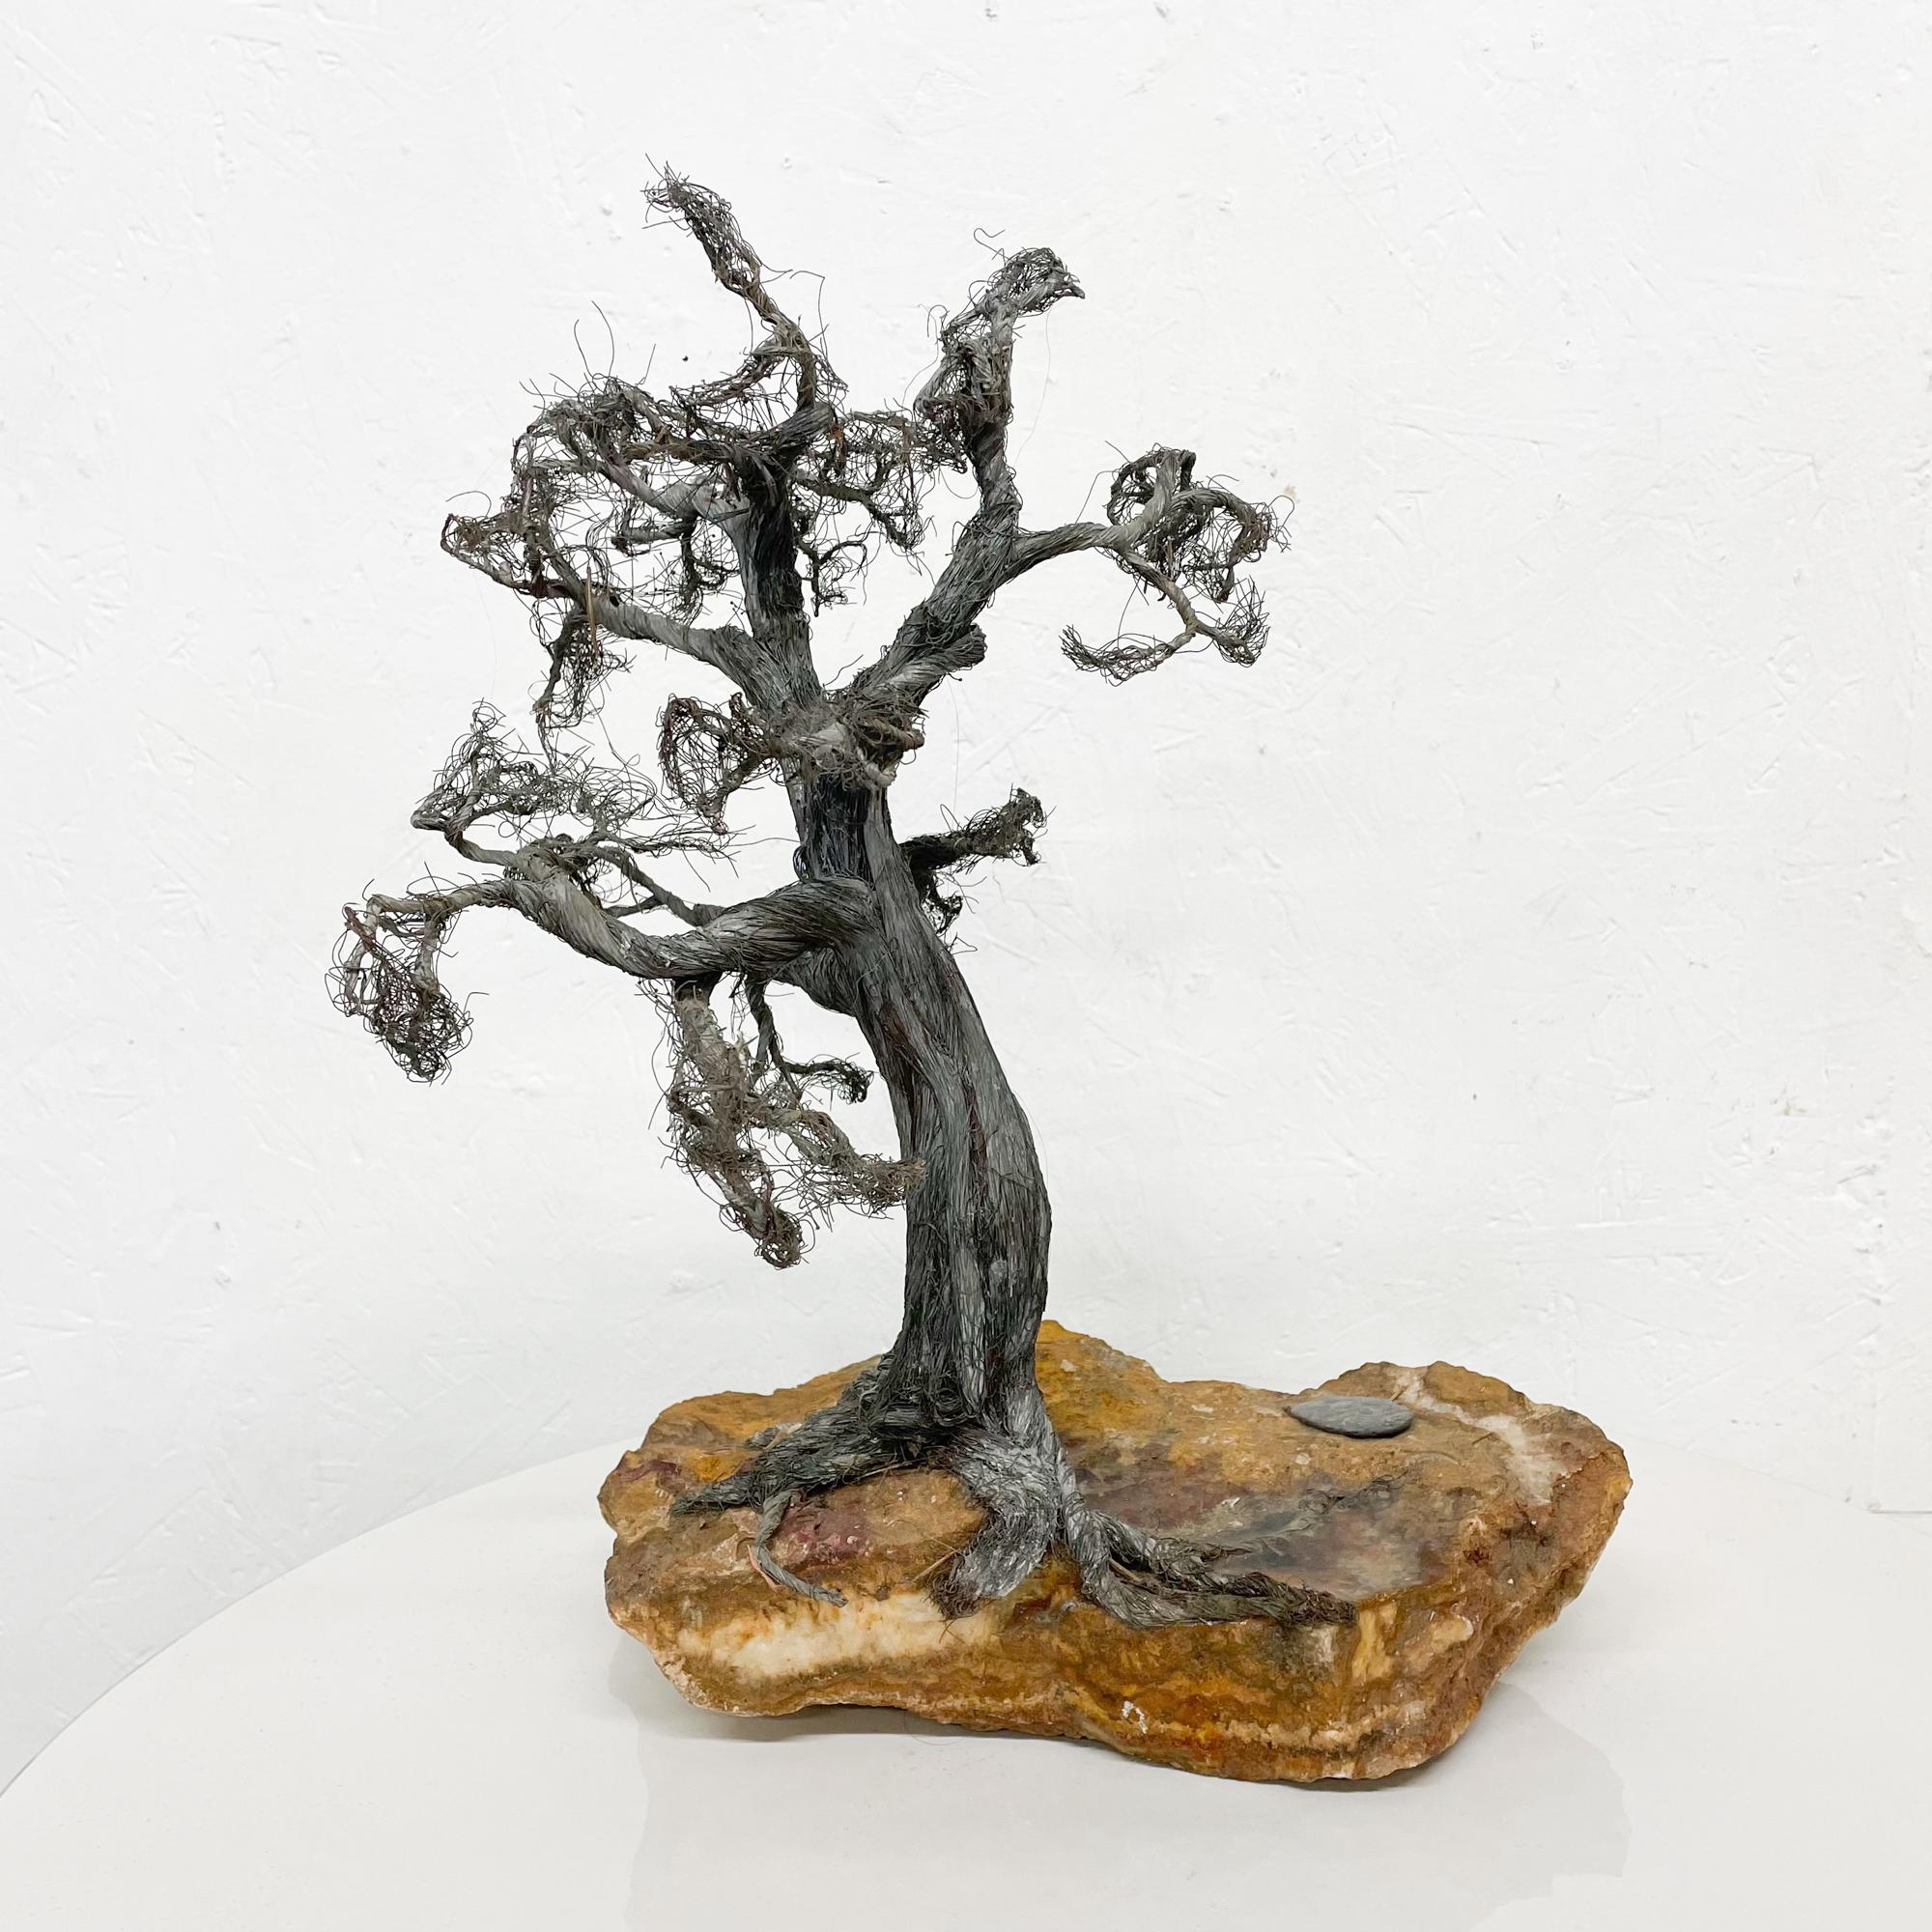 American Modern Raw Edge Botanical Art Bonsai Tree Sculpture in Stone & Stainless Steel